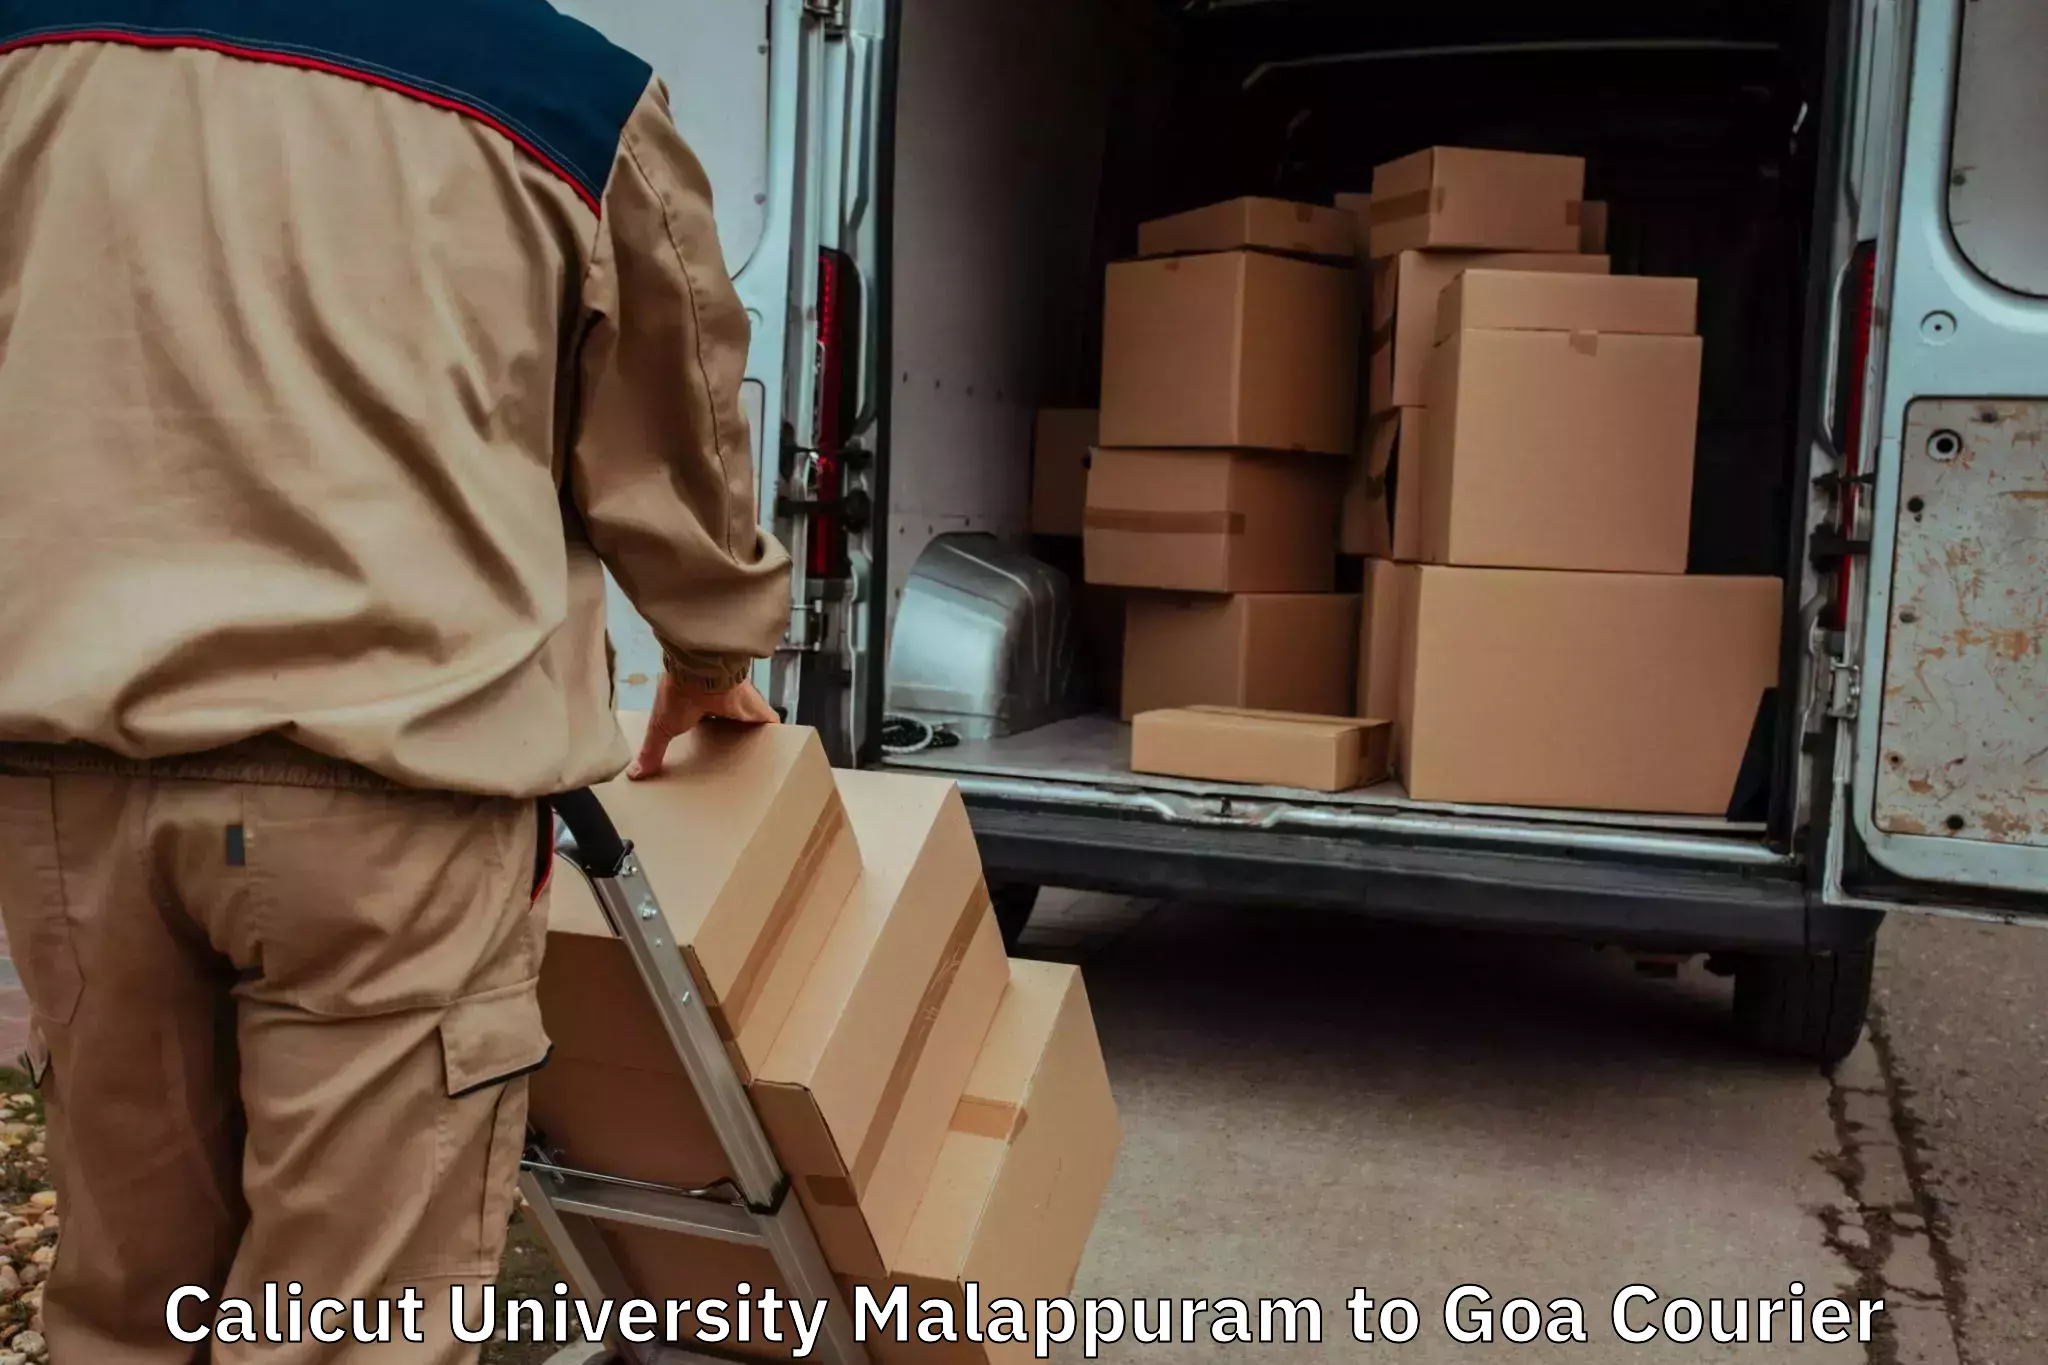 Furniture delivery service Calicut University Malappuram to IIT Goa